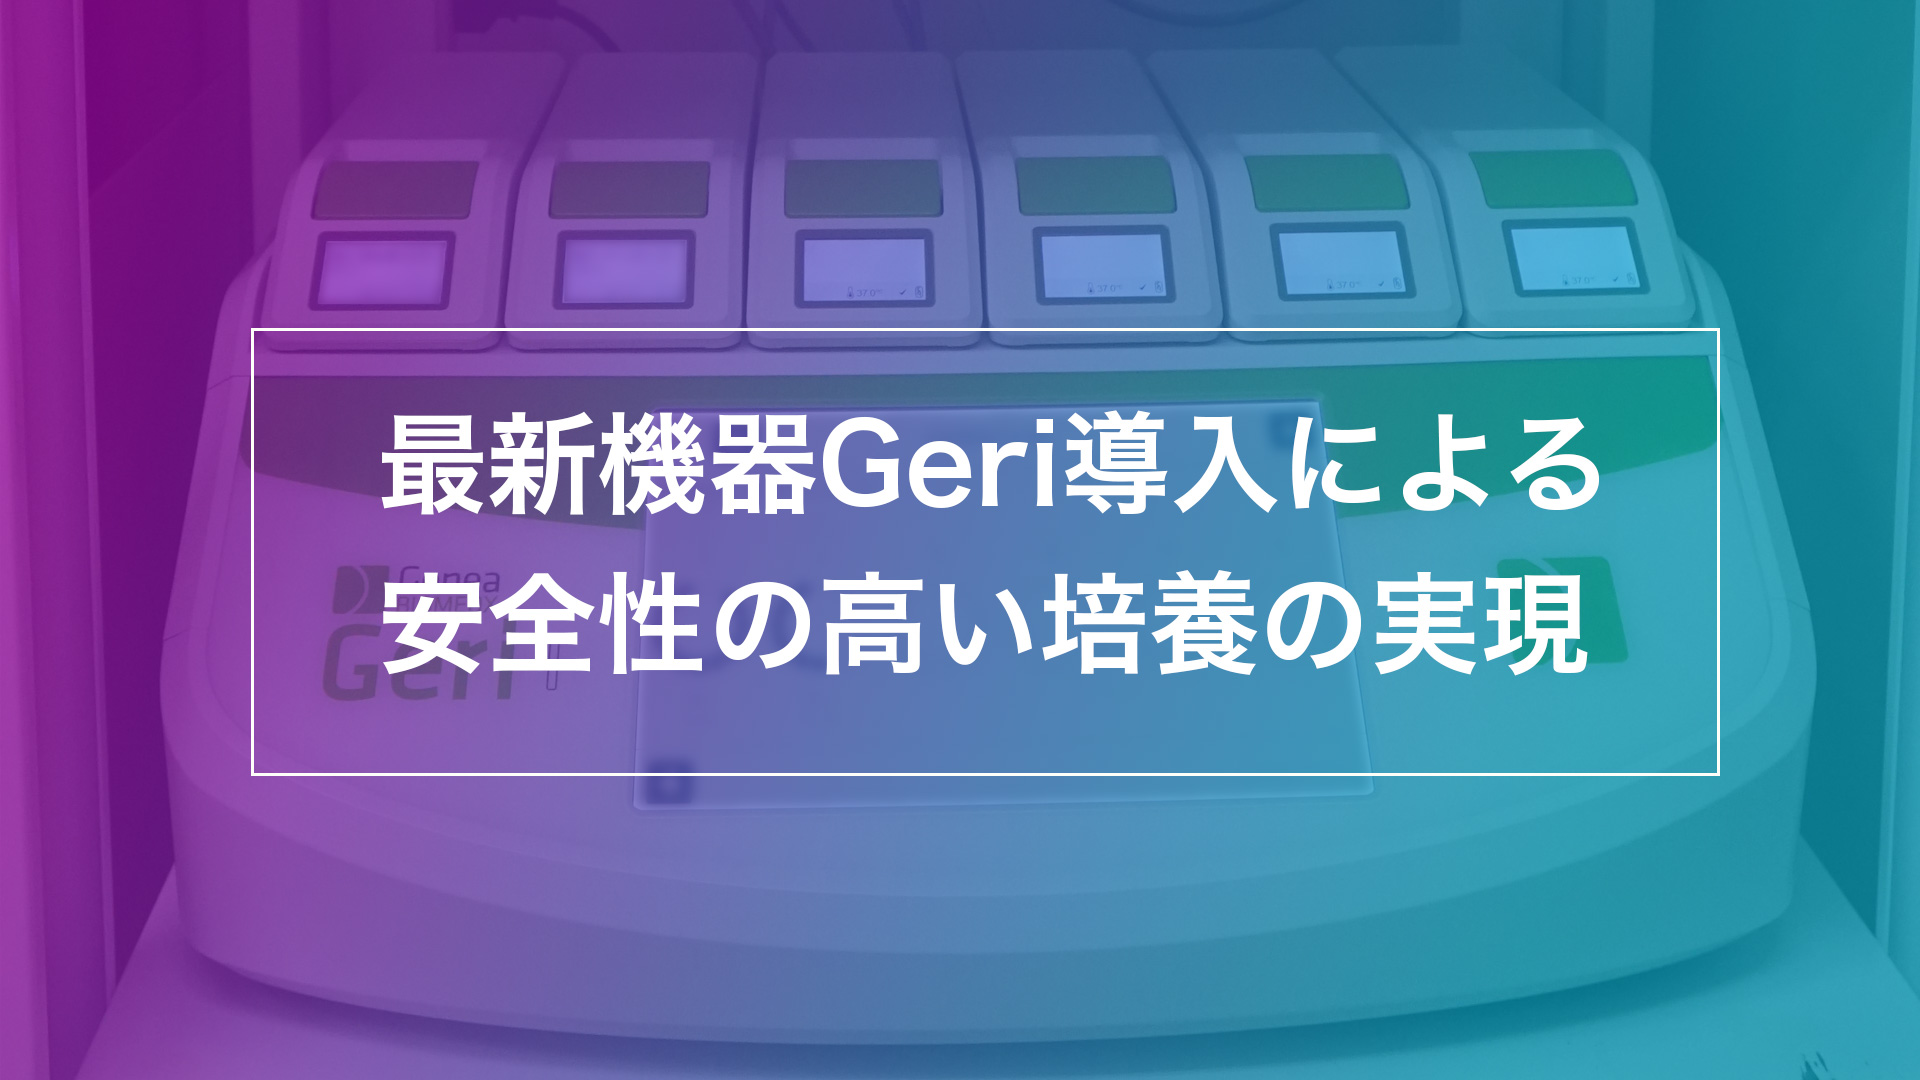 Geri+についてご紹介